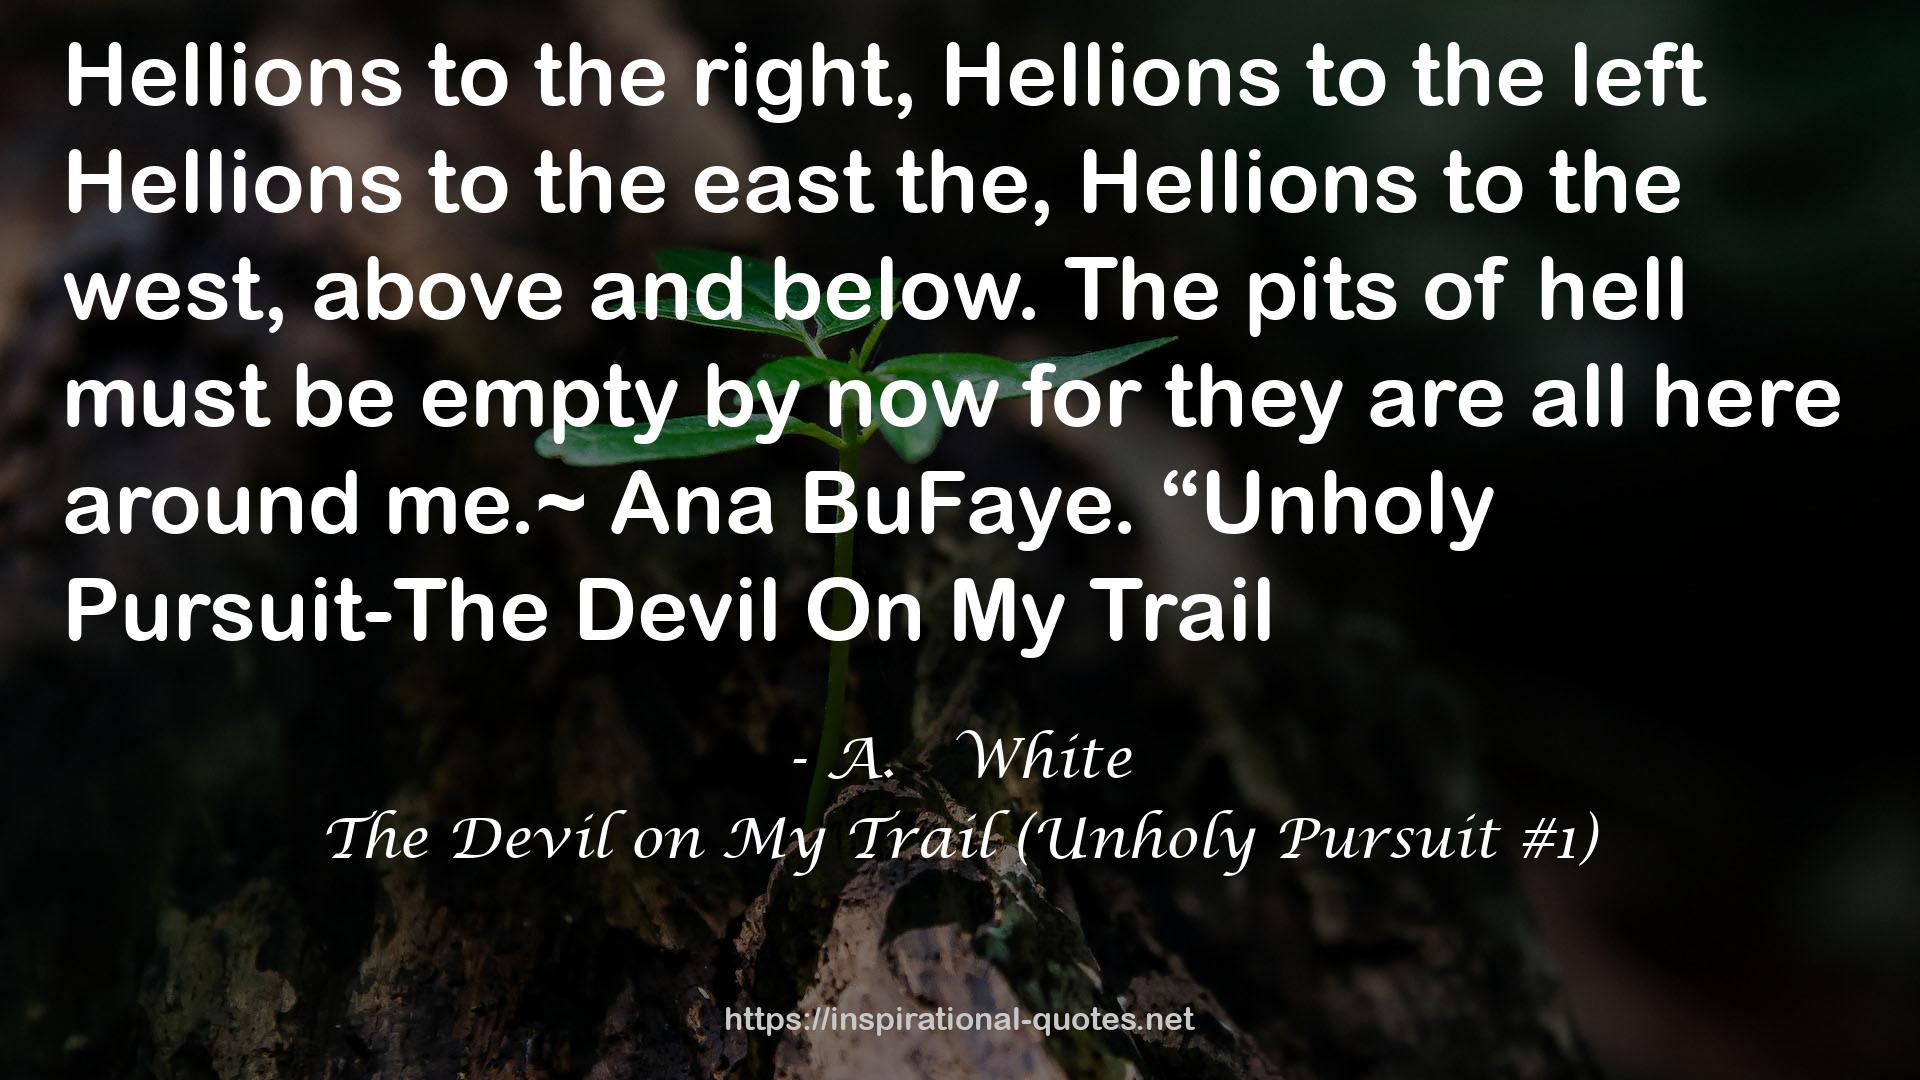 The Devil on My Trail (Unholy Pursuit #1) QUOTES